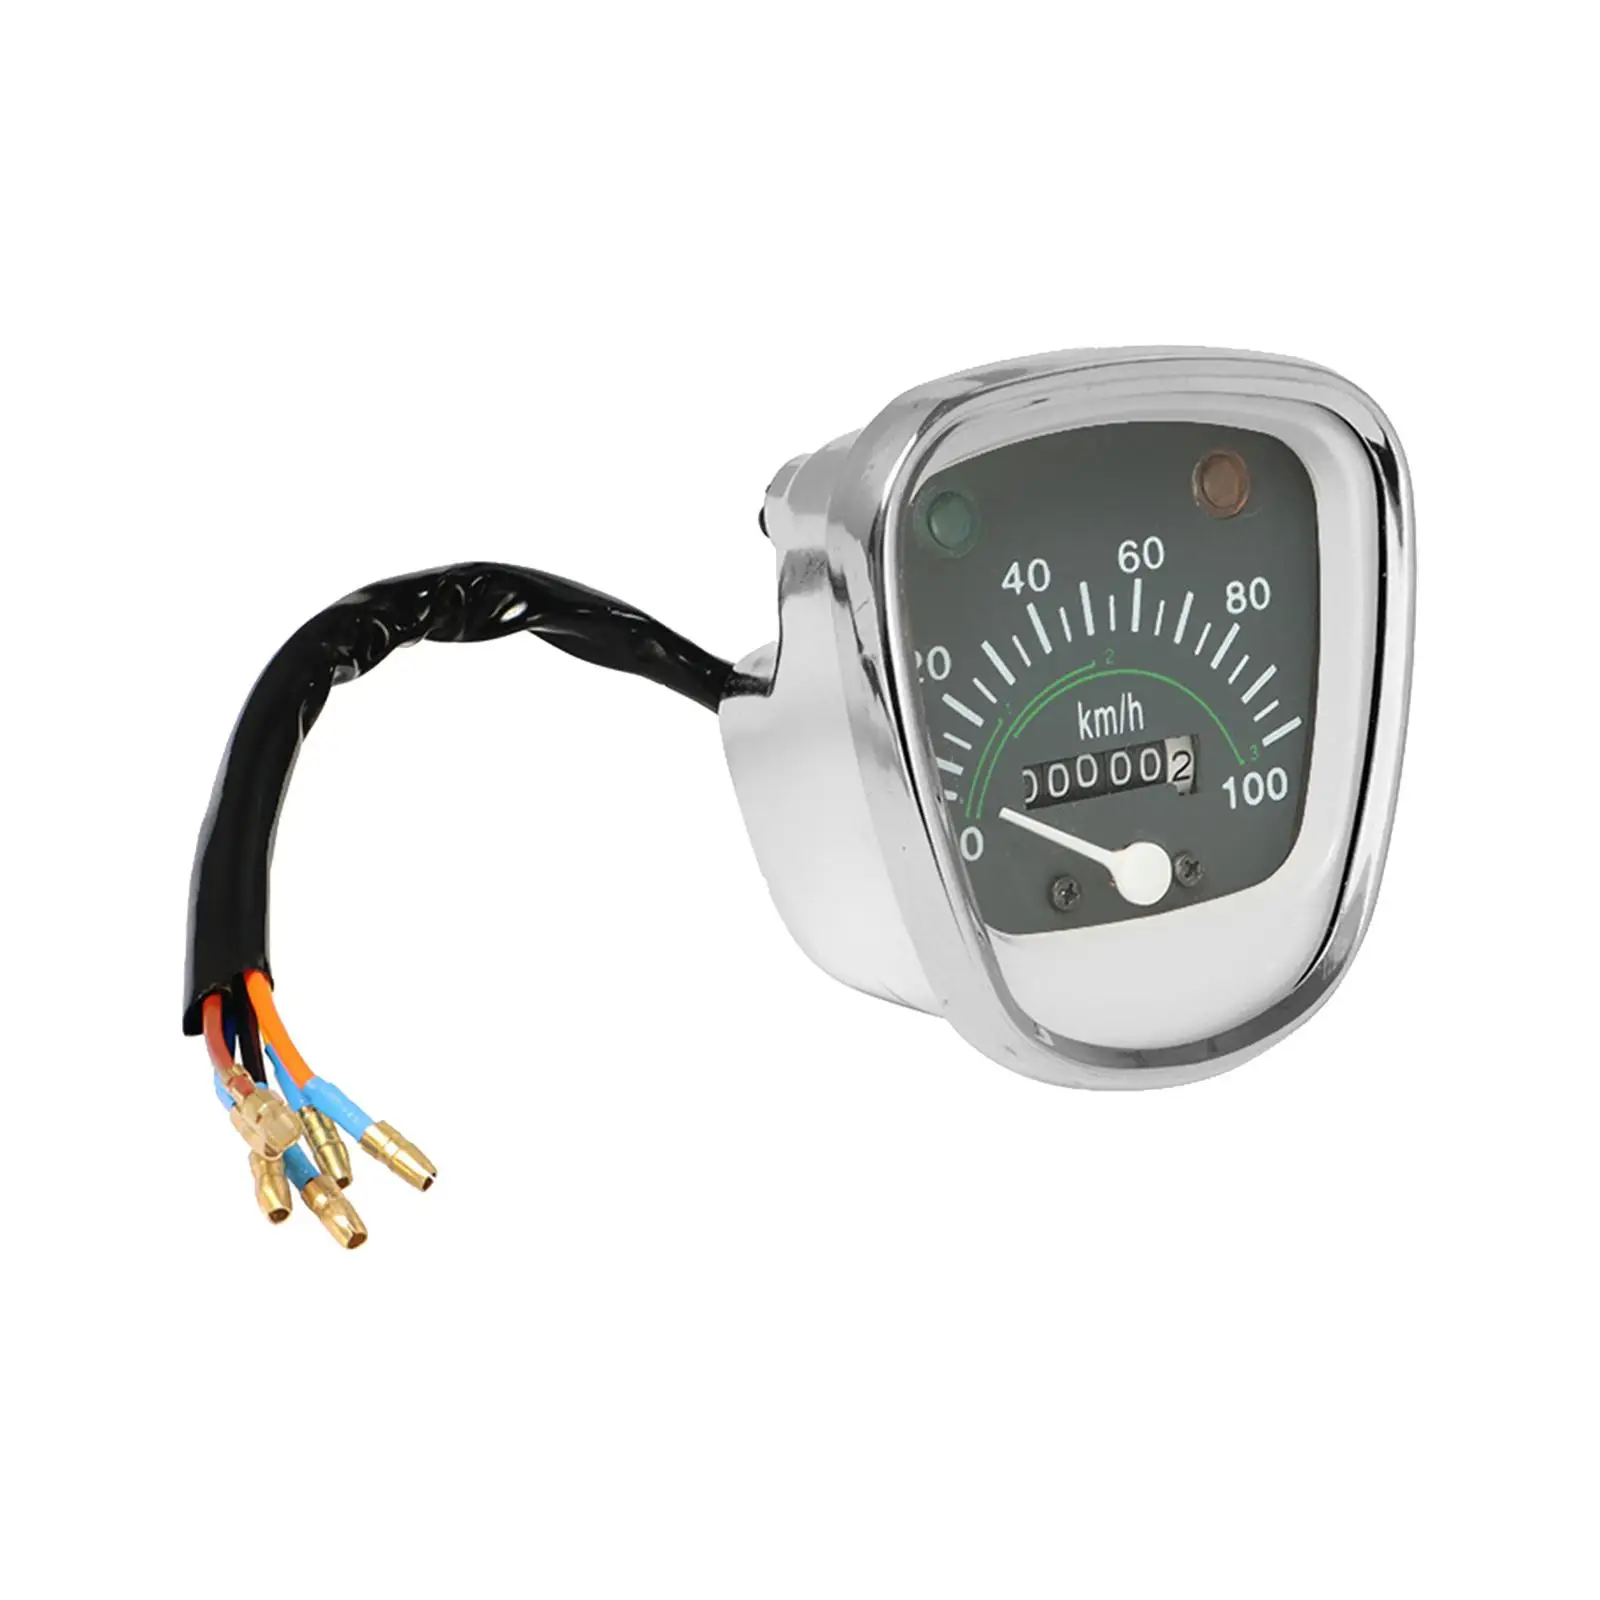 Motorbicycle Instrument Tachometer Pmma Light Guide Plate C70 -30C~80C Indicator Light Display 12V for Motorbike Refit